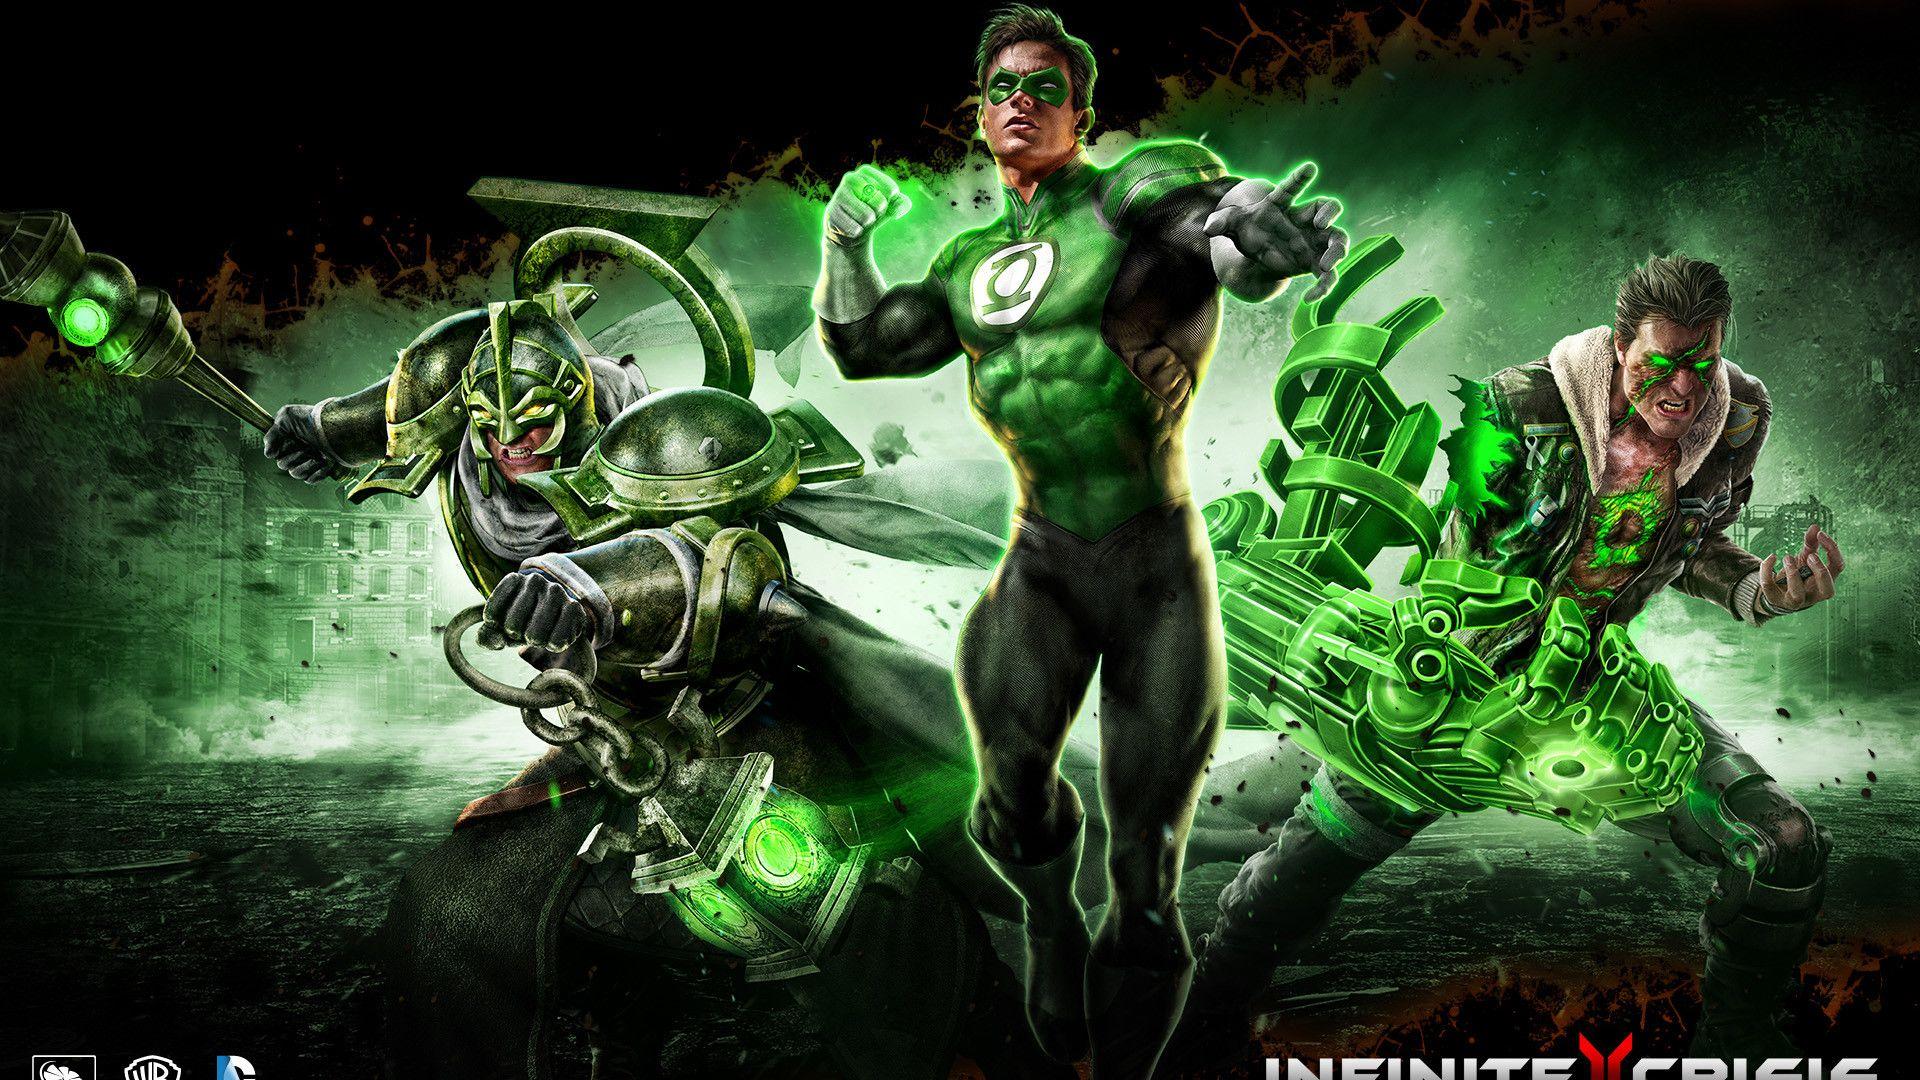 Awesome Green Lantern Wallpaper Image Cosmic Book News